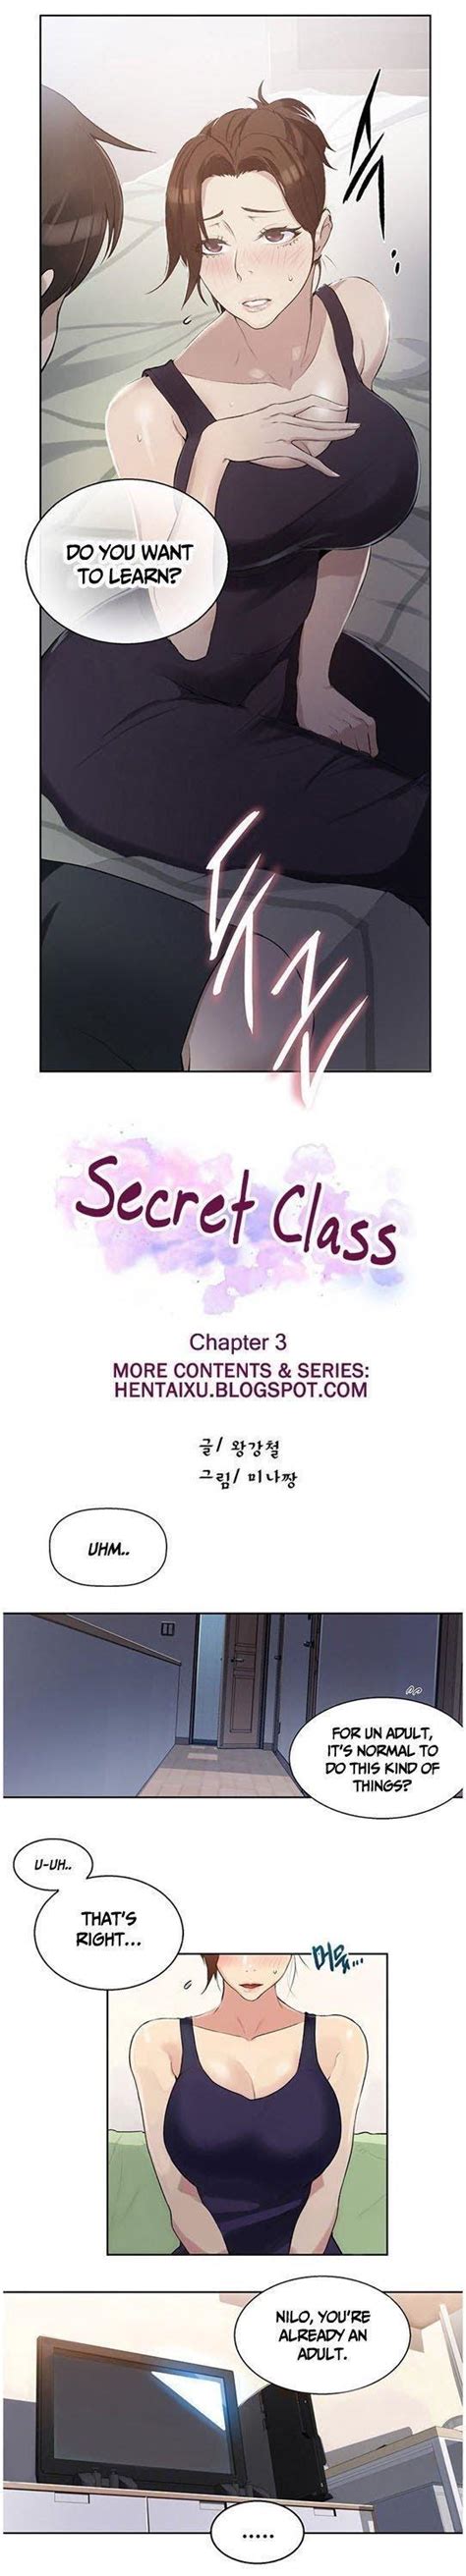 Read Secret Class Chapter 3 Manganelo